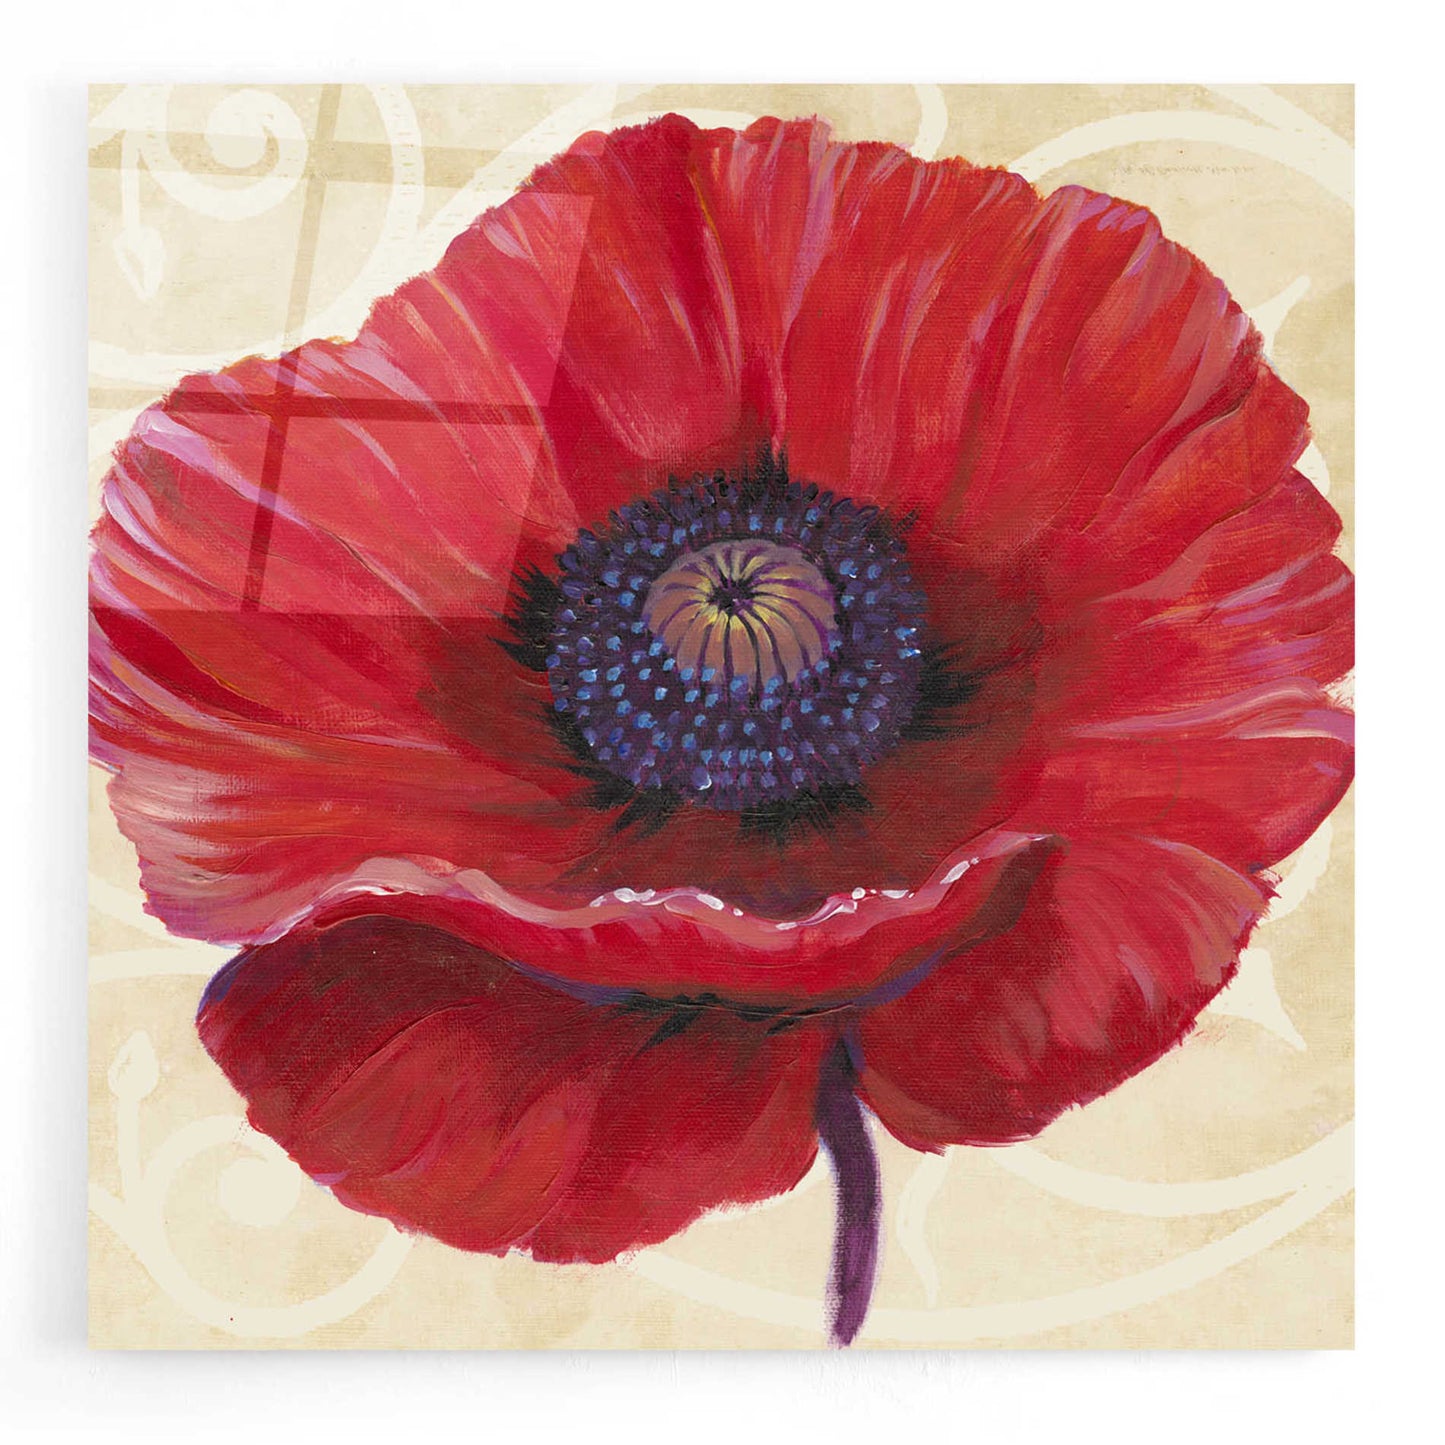 Epic Art 'Red Poppy II' by Tim O'Toole, Acrylic Glass Wall Art,24x24